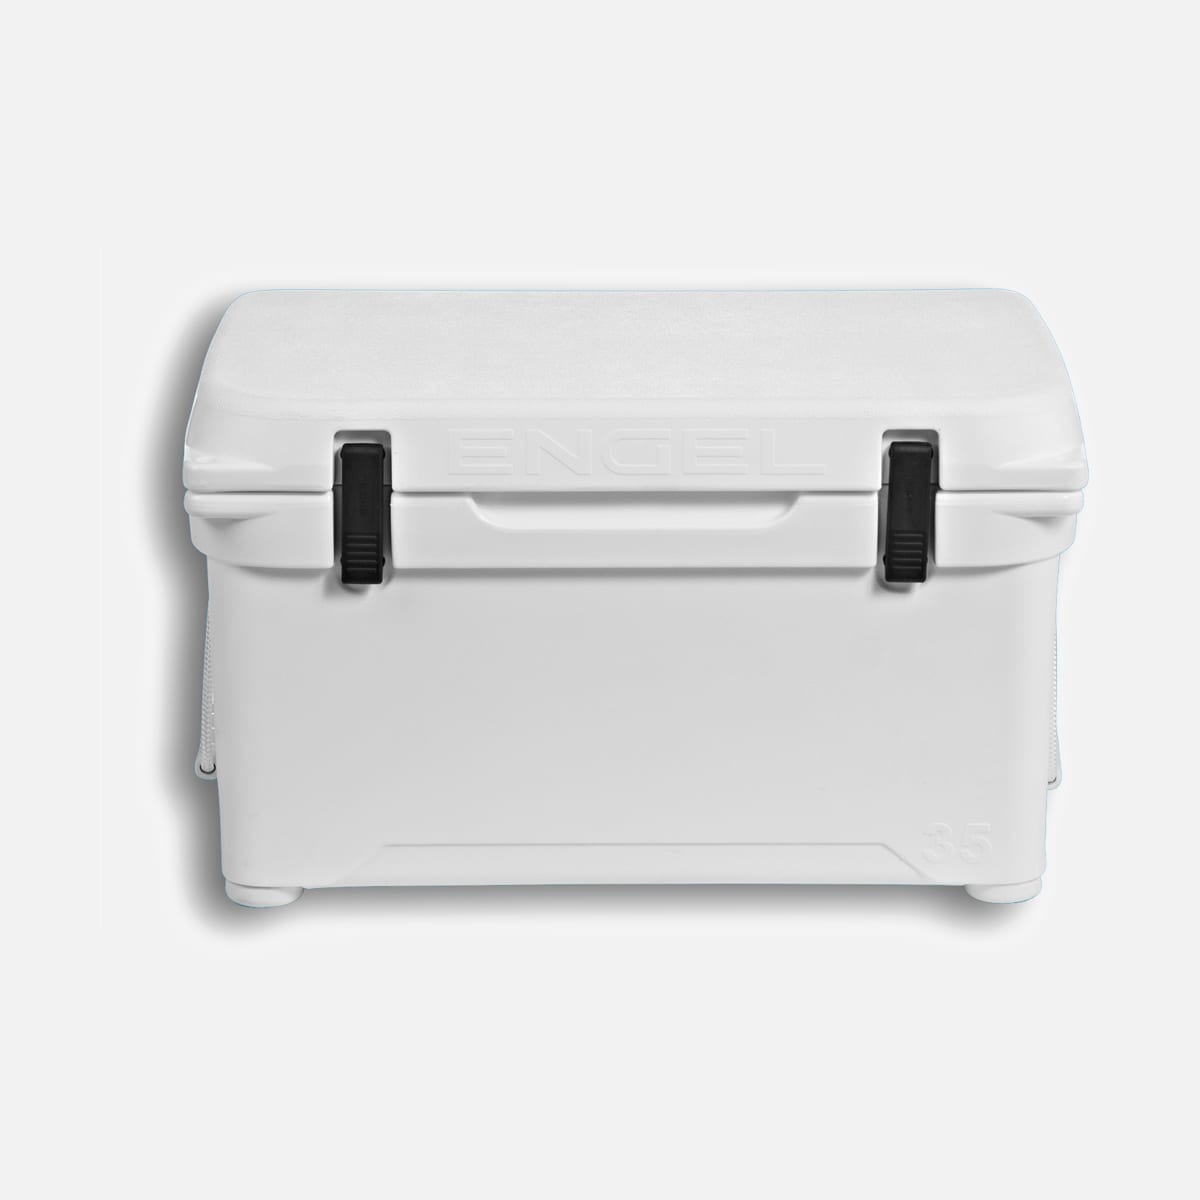 Engel Ice Box 33LT - WHITE Inc Basket